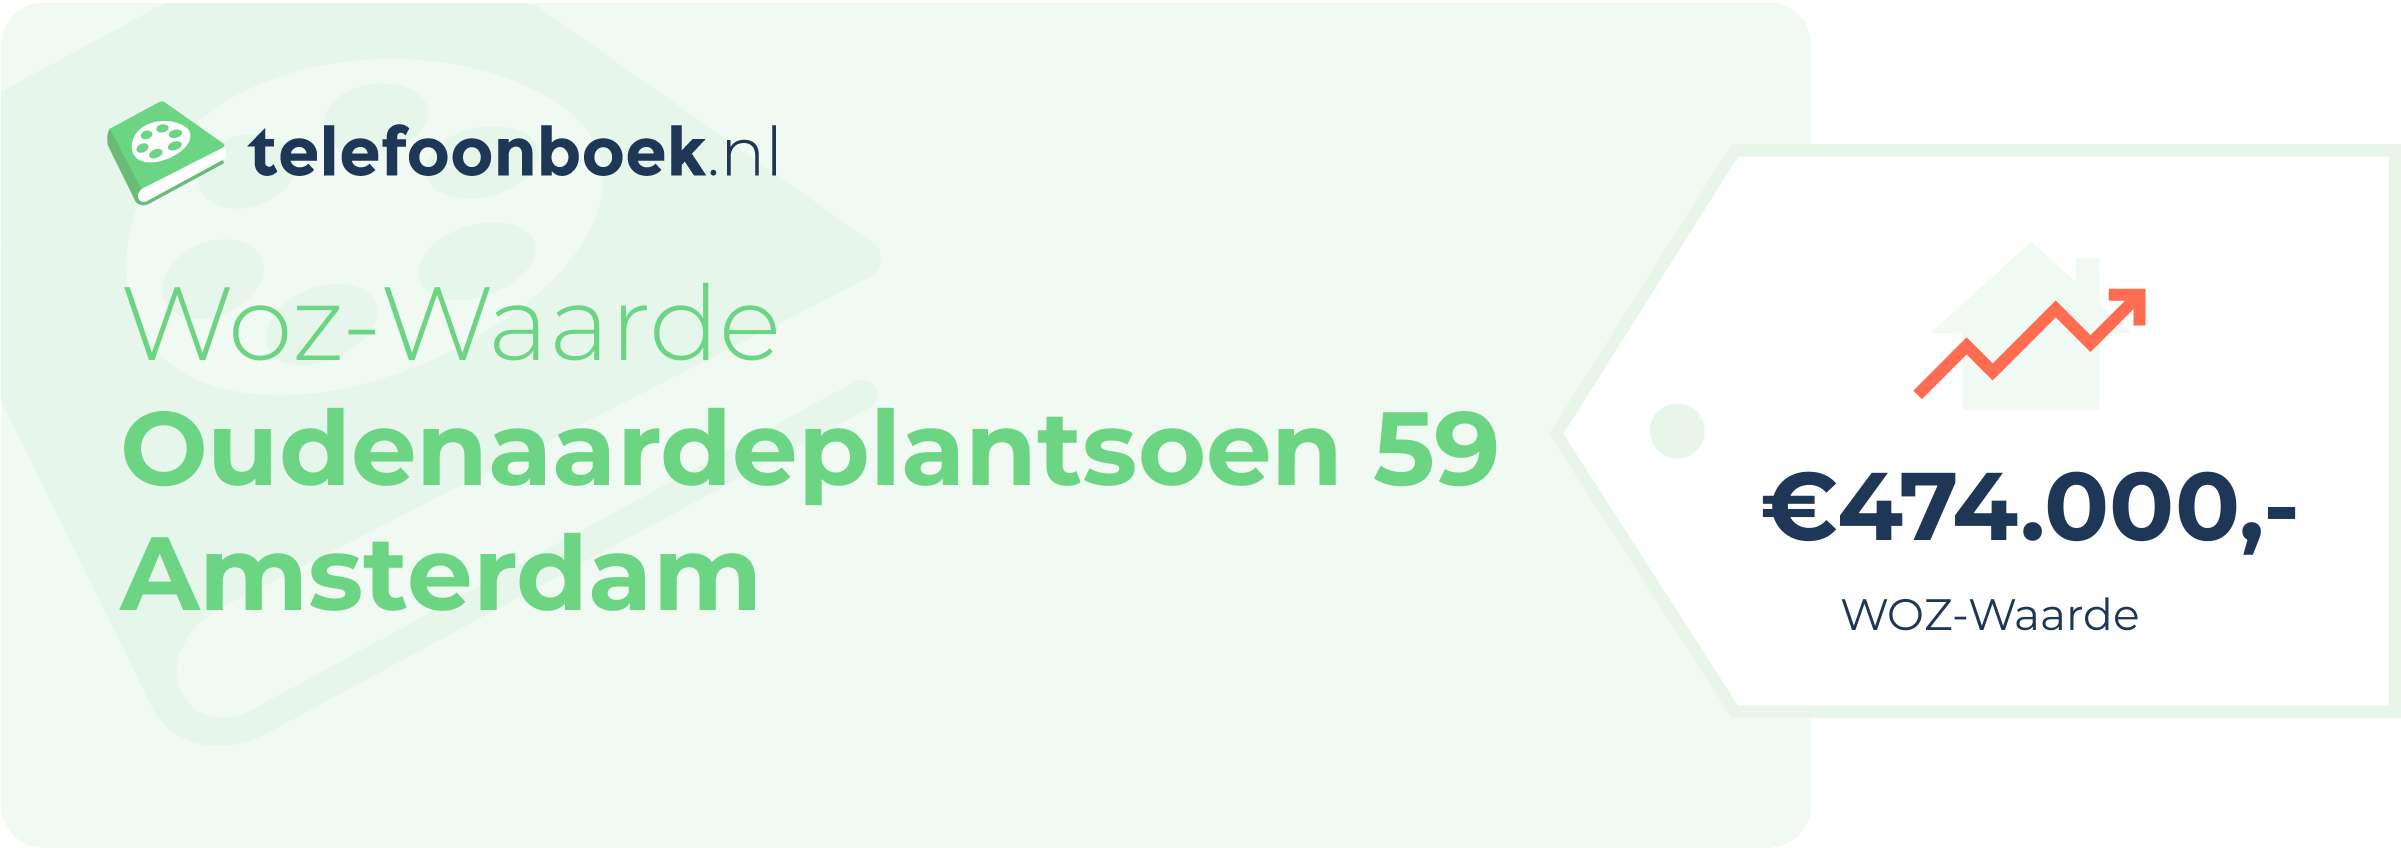 WOZ-waarde Oudenaardeplantsoen 59 Amsterdam